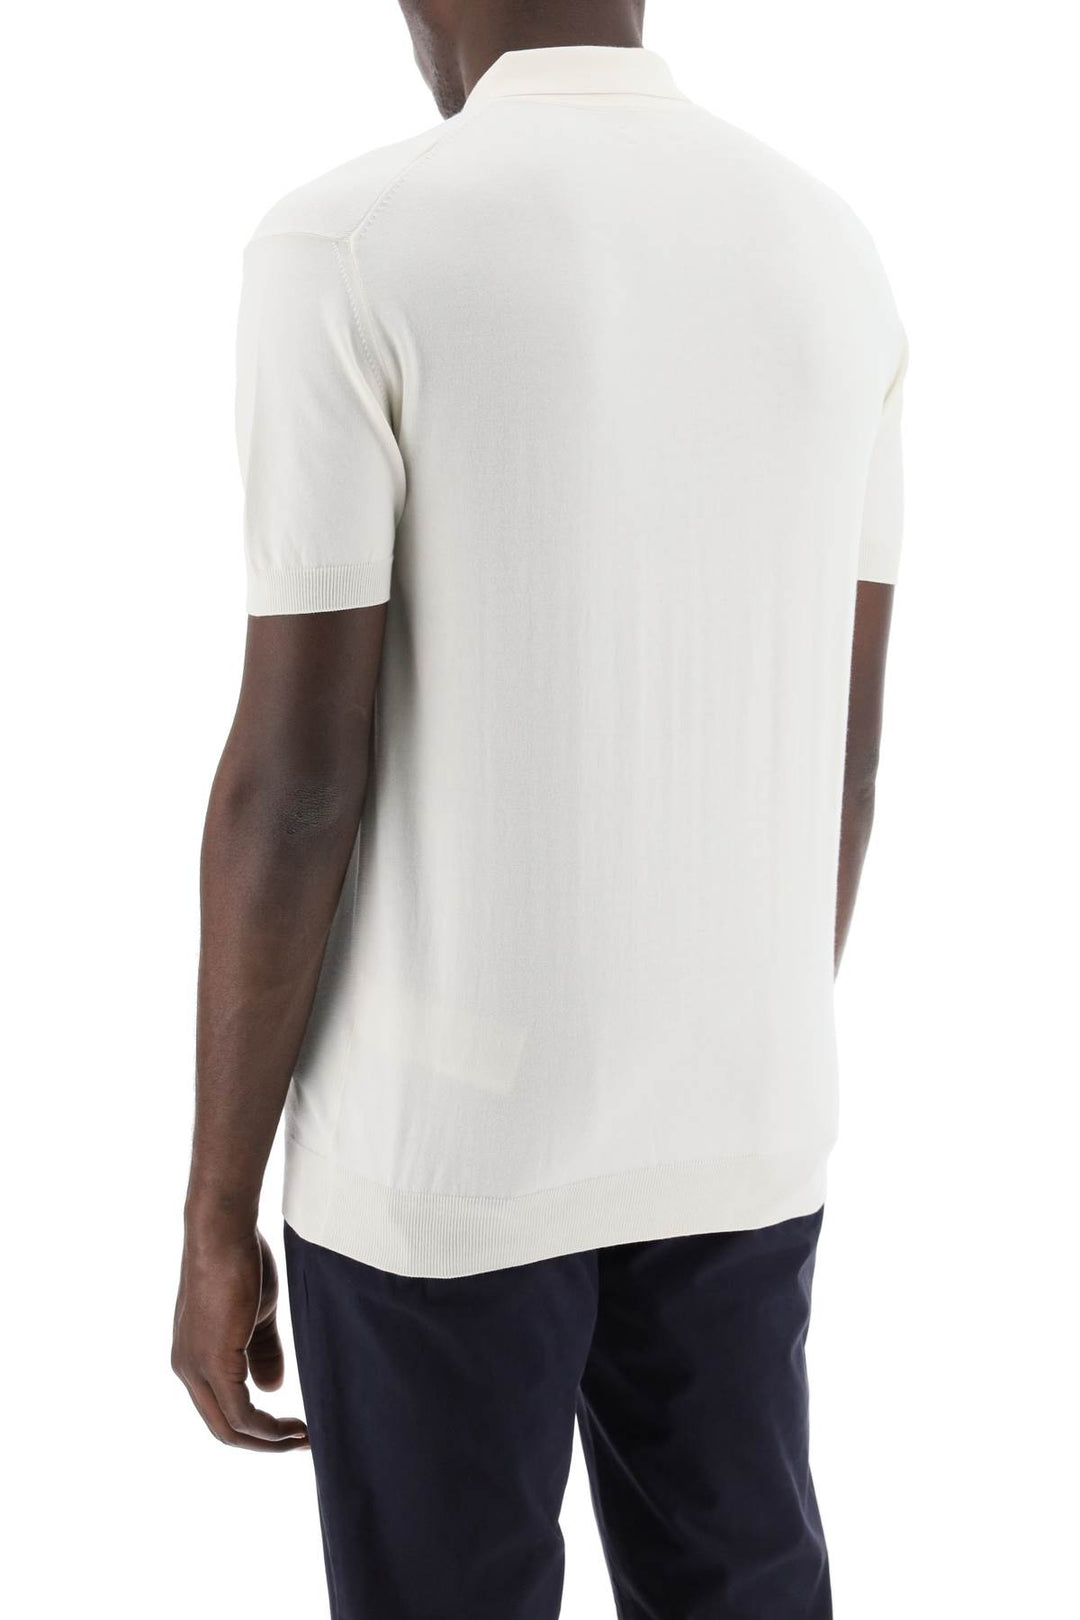 Baracuta Short Sleeved Cotton Polo Shirt For   Bianco